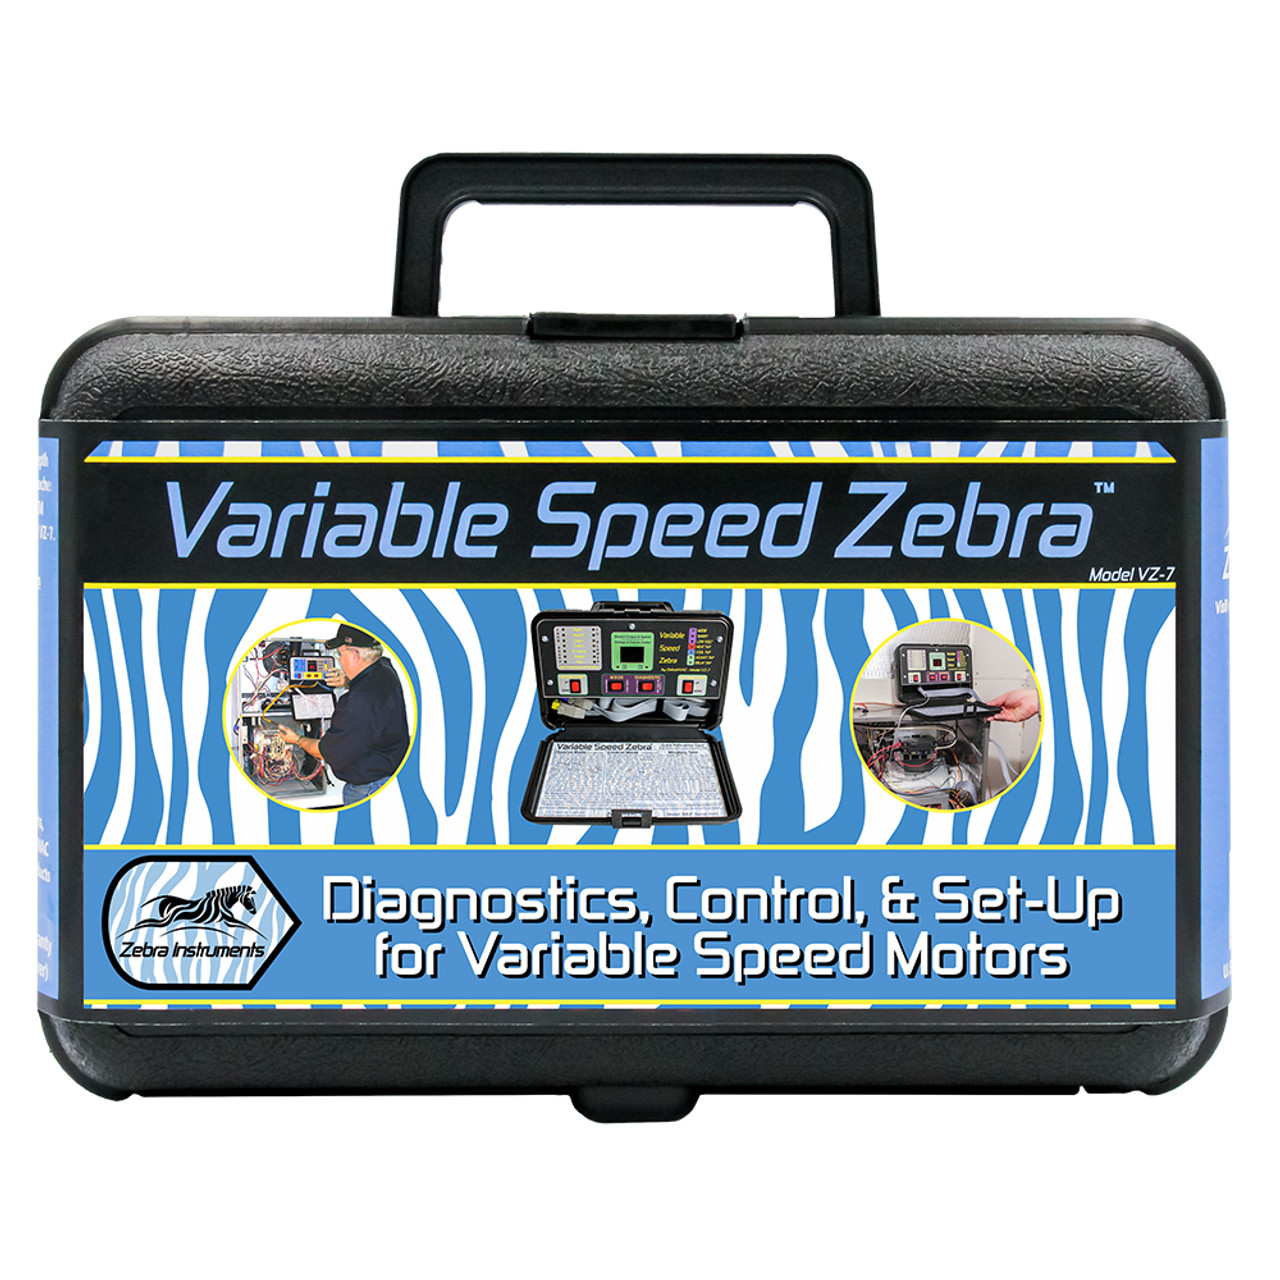 Zebra Variable Speed Zebra Advanced ECM Motor Diagnostic